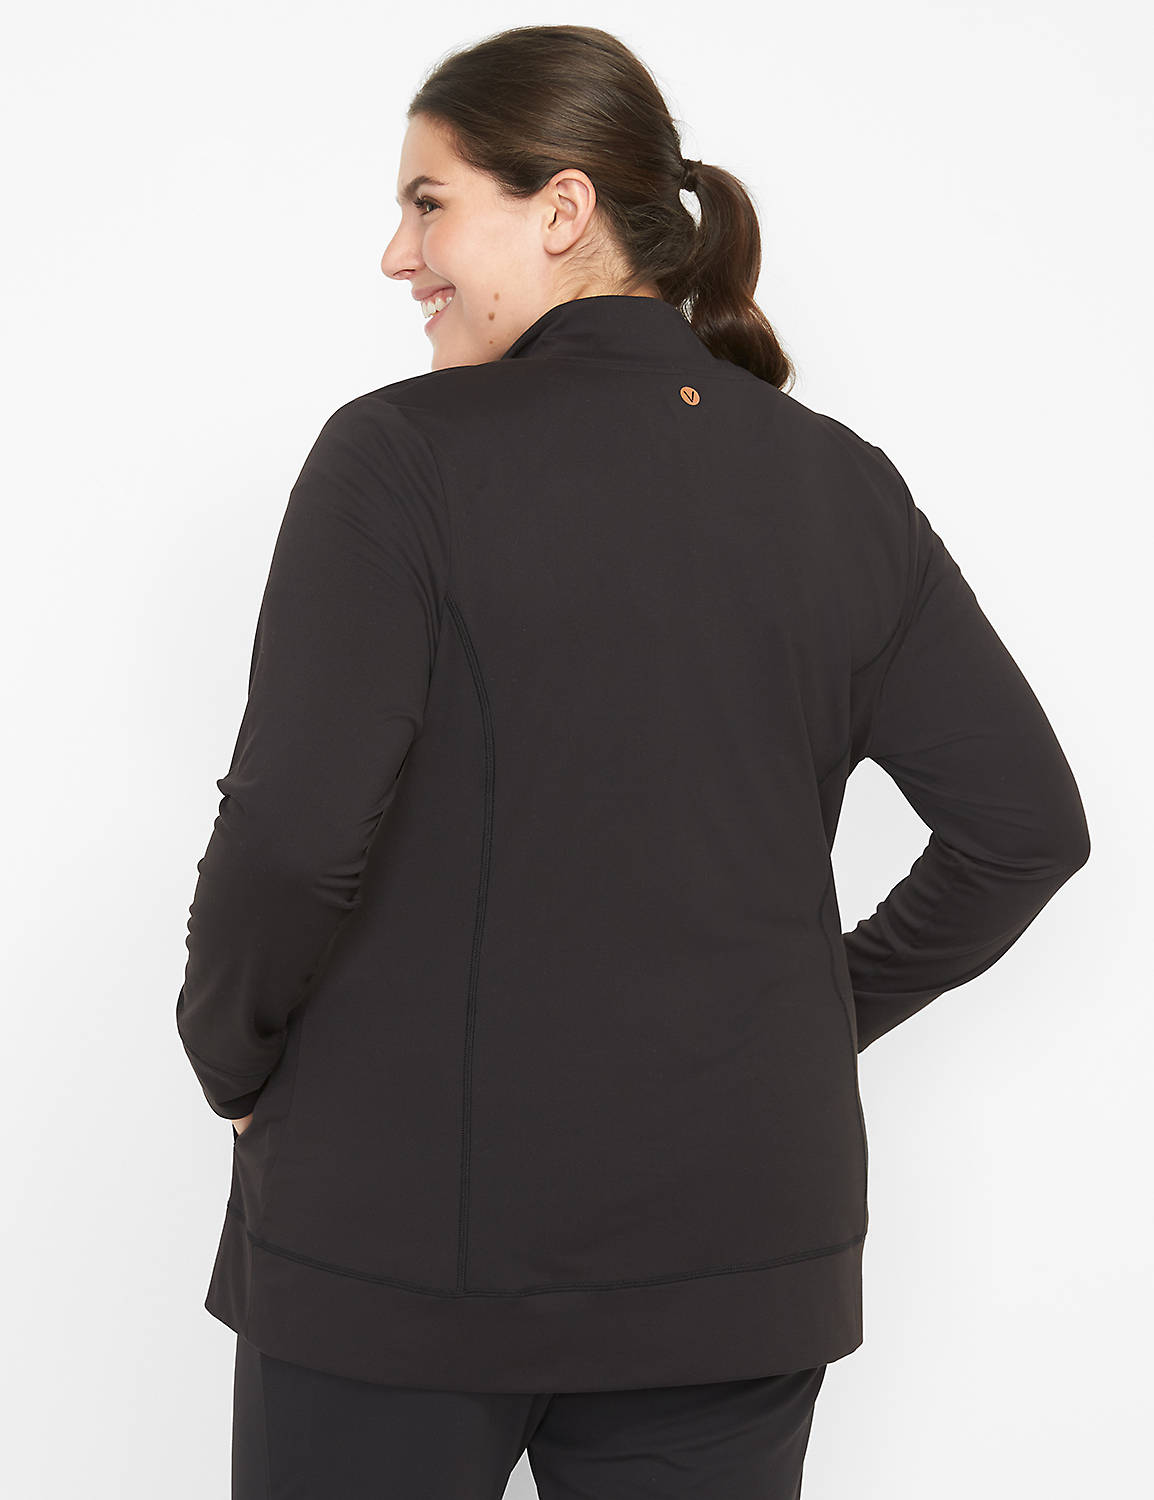 Long Sleeve Livi Soft Zip Up Jacket S 1124714:Ascena Black:10/12 Product Image 2